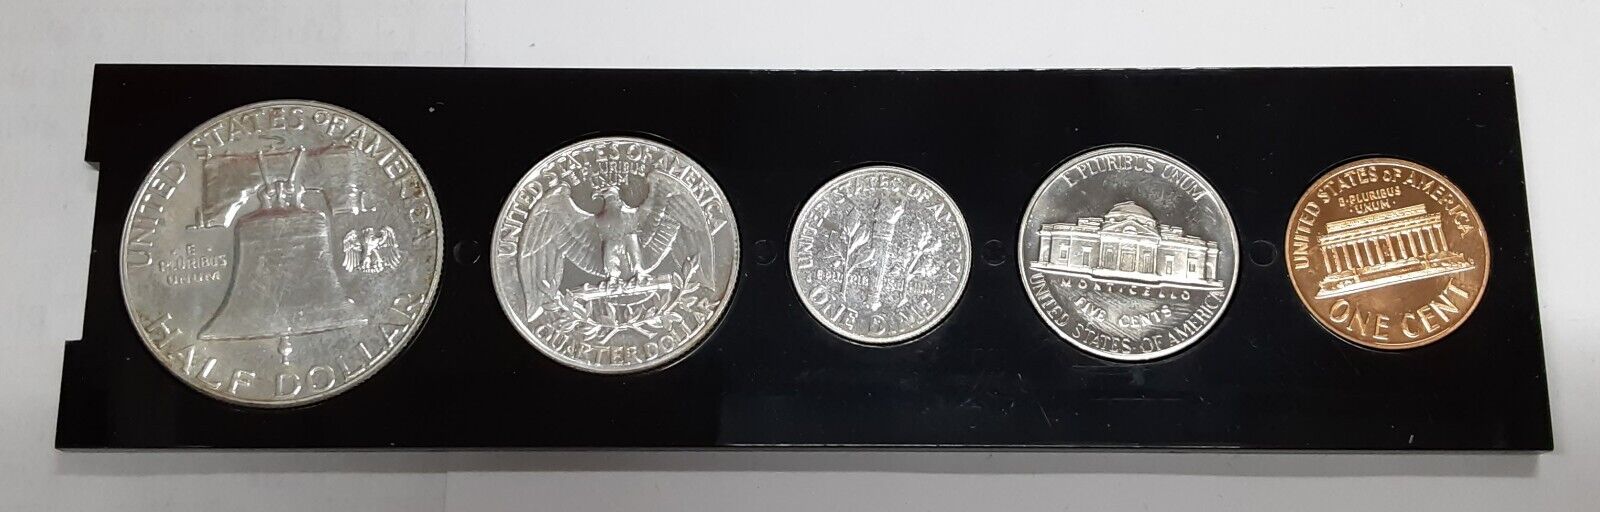 1960 Proof Year Set 5 Silver Coins w/Half, Quarter, & Dime in Black Holder  (C)